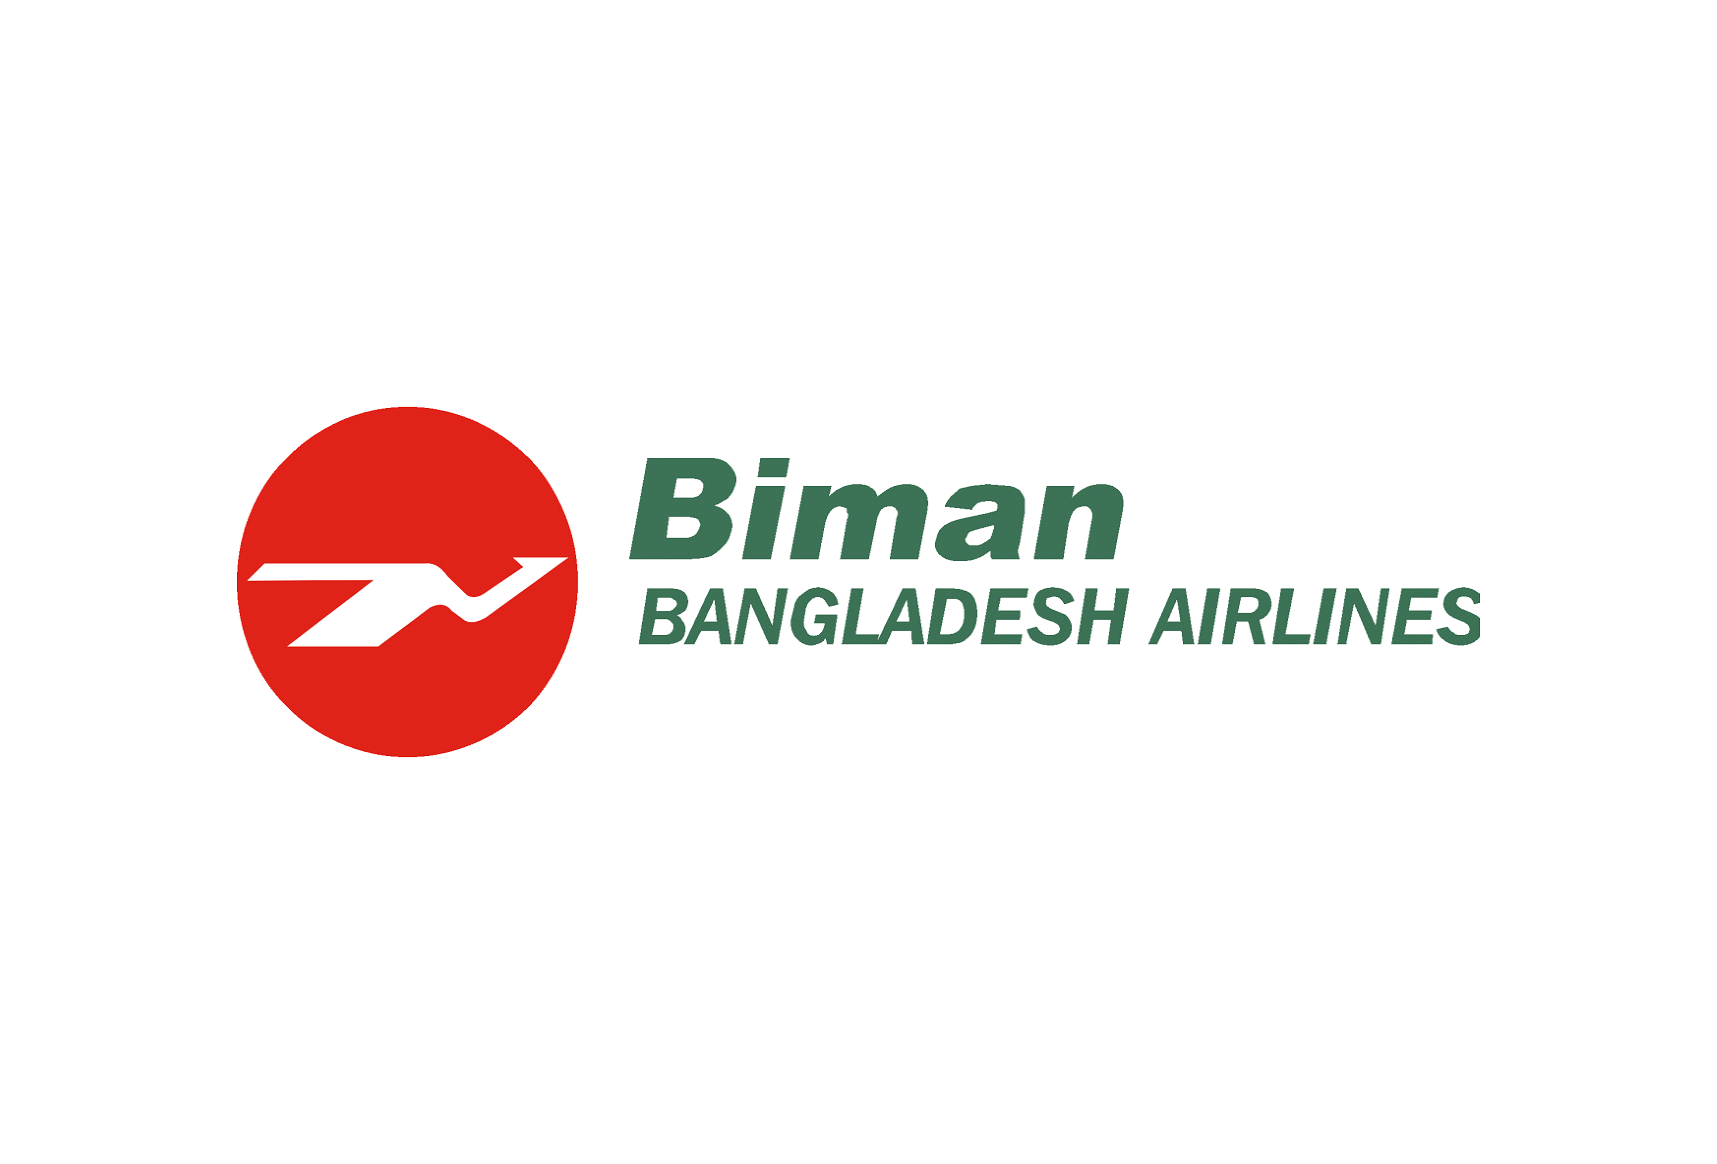 Biman Bangladesh